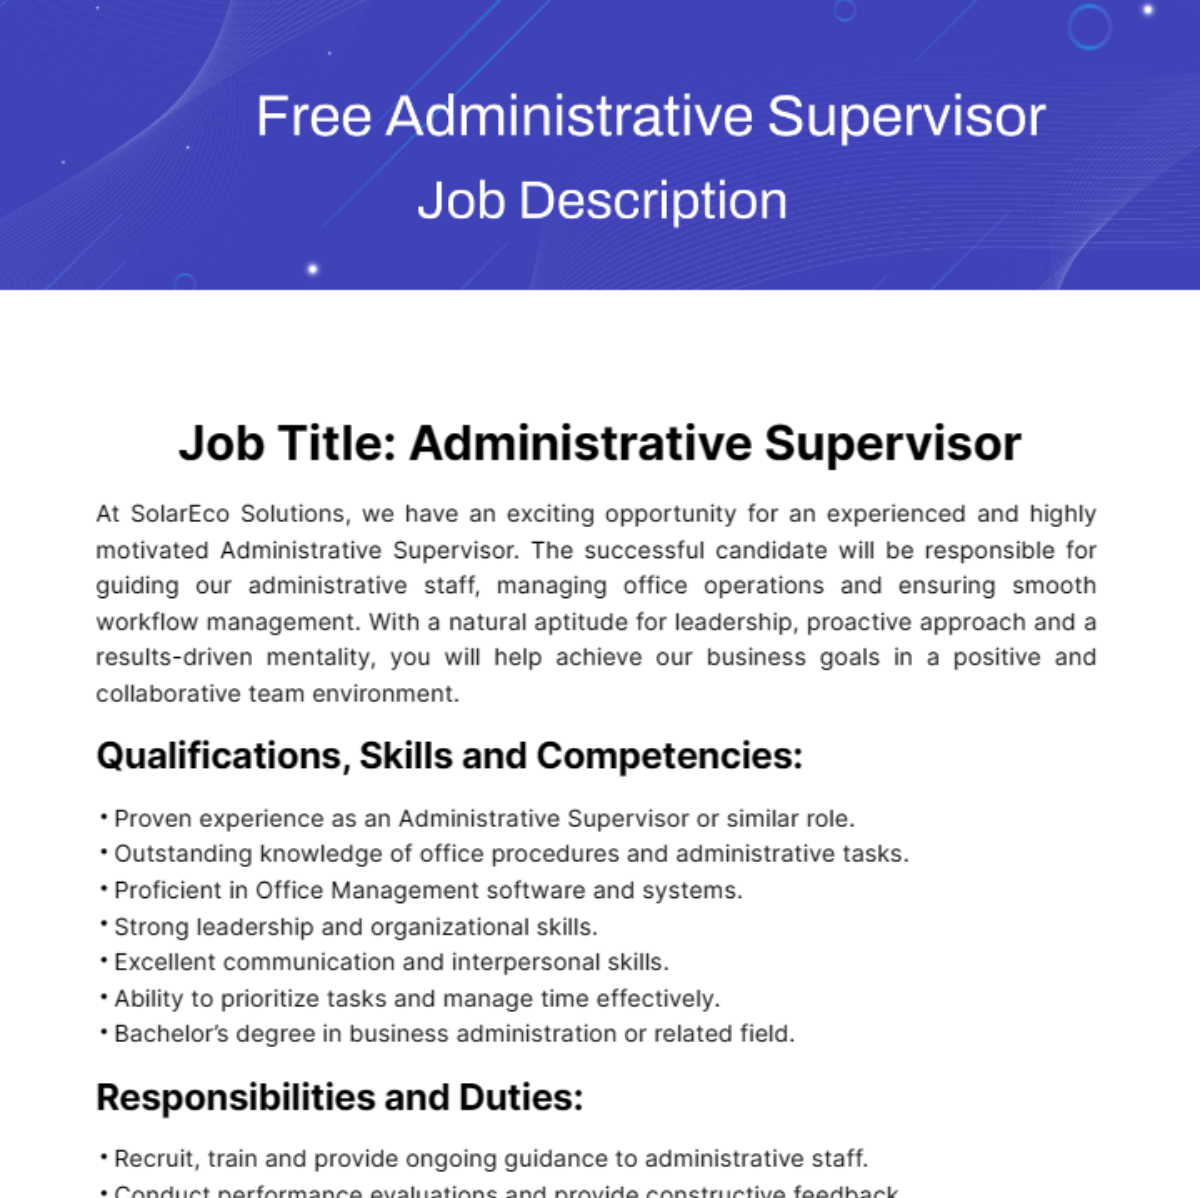 Free Administrative Supervisor Job Description Template